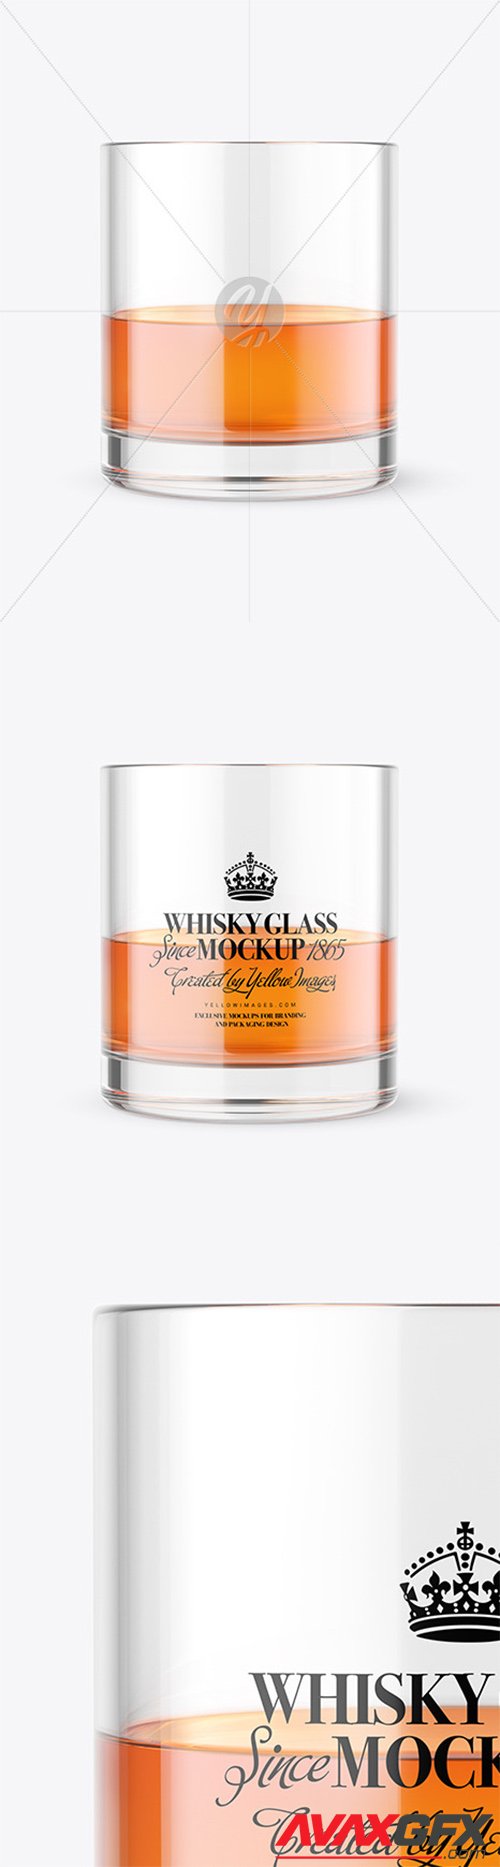 Whisky Glass Mockup 64937